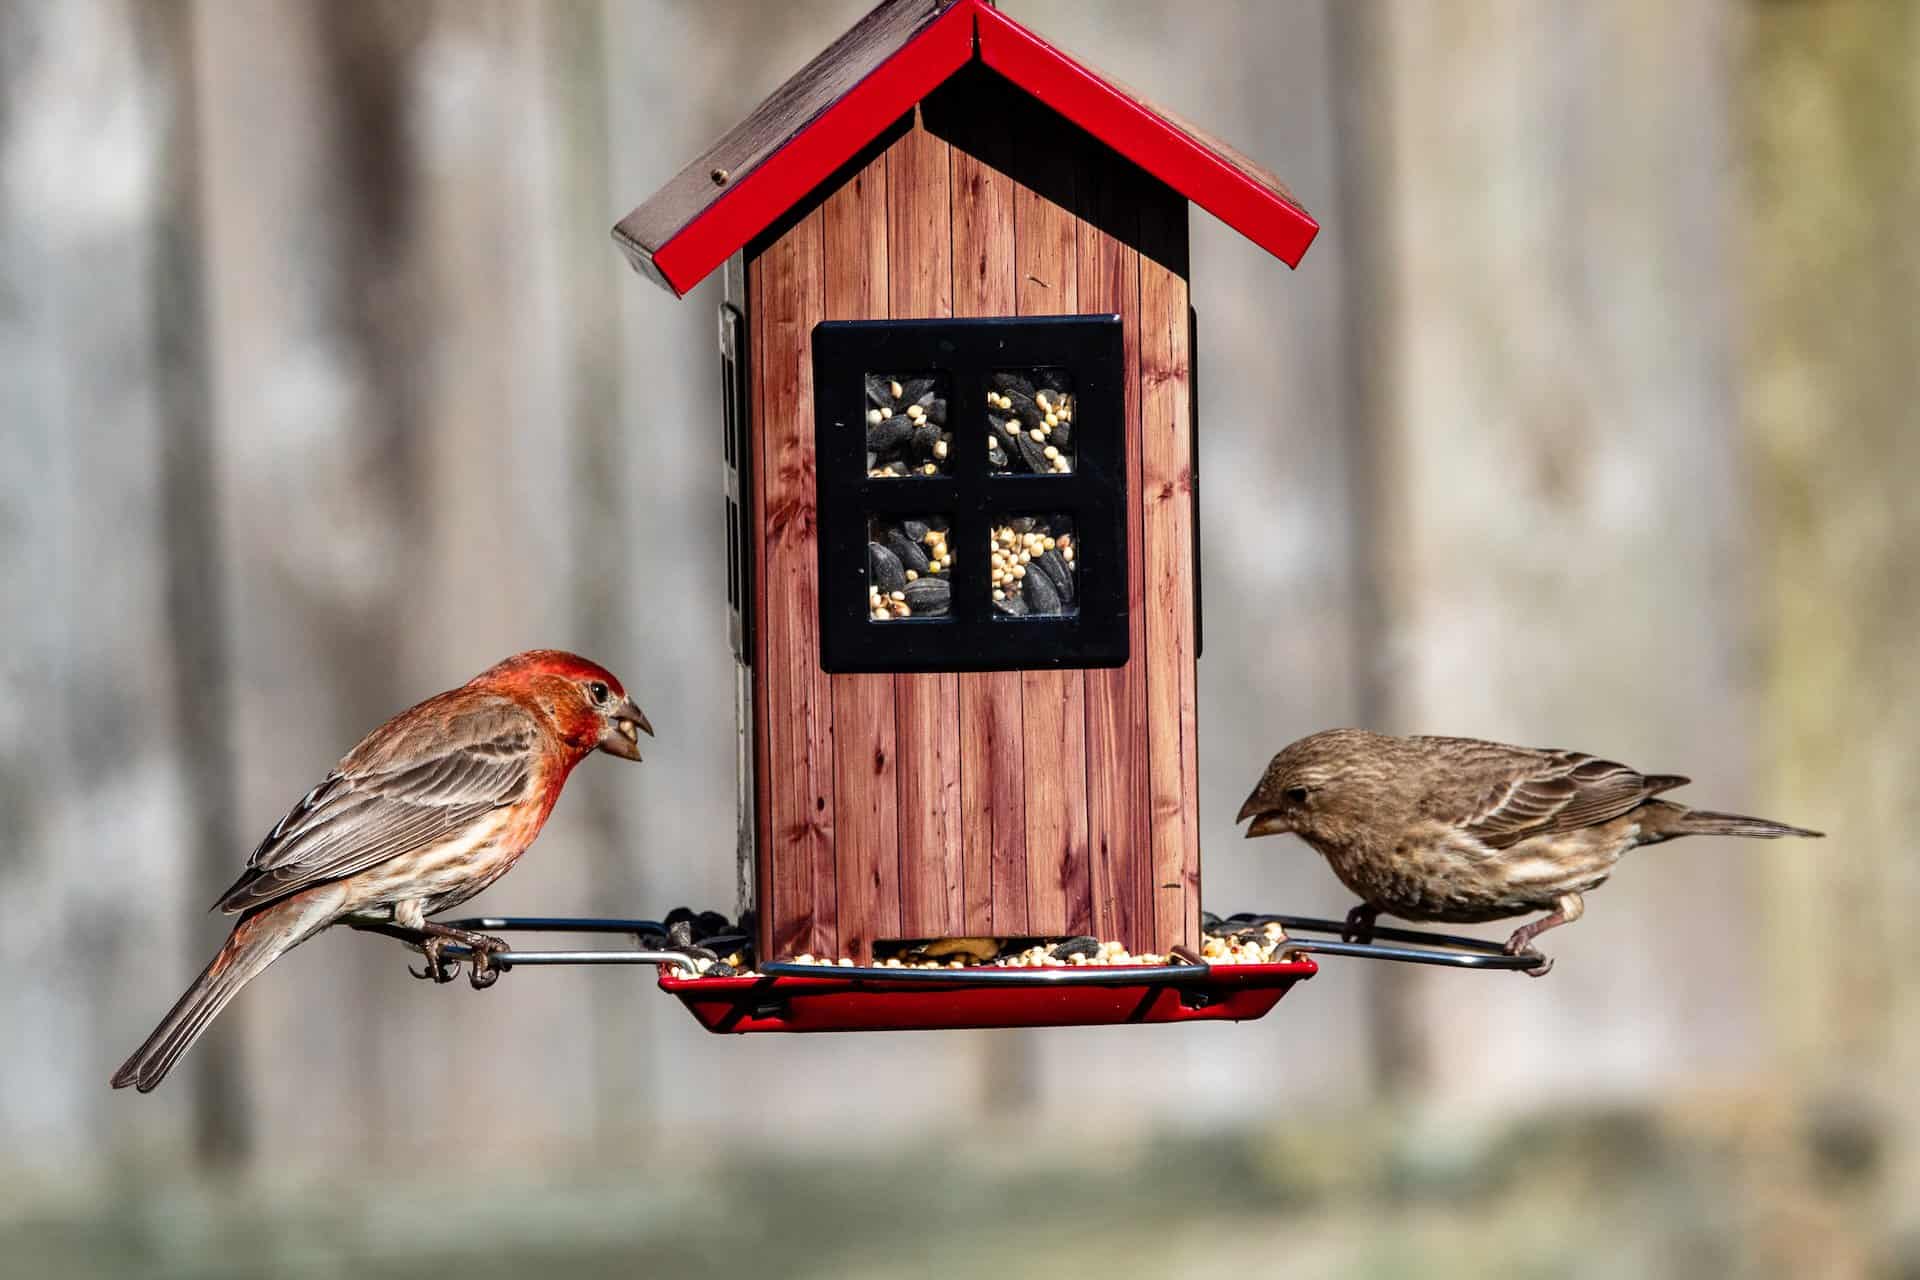 Outdoor bird feeder